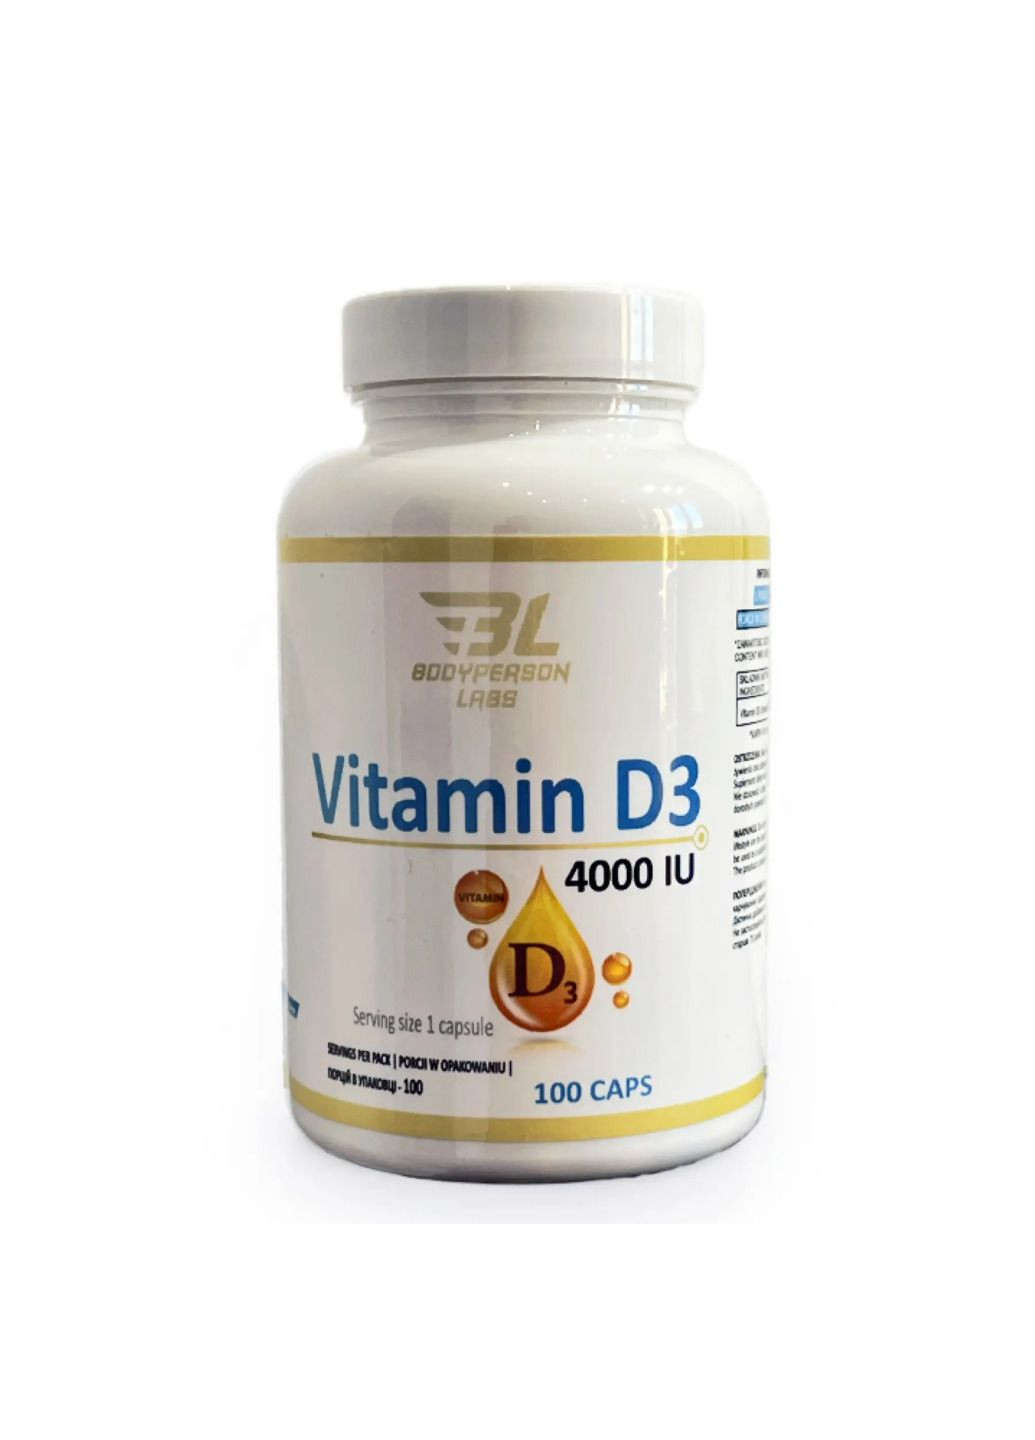 Vitamin D3 4000iu - 100 caps Bodyperson Labs (285793173)